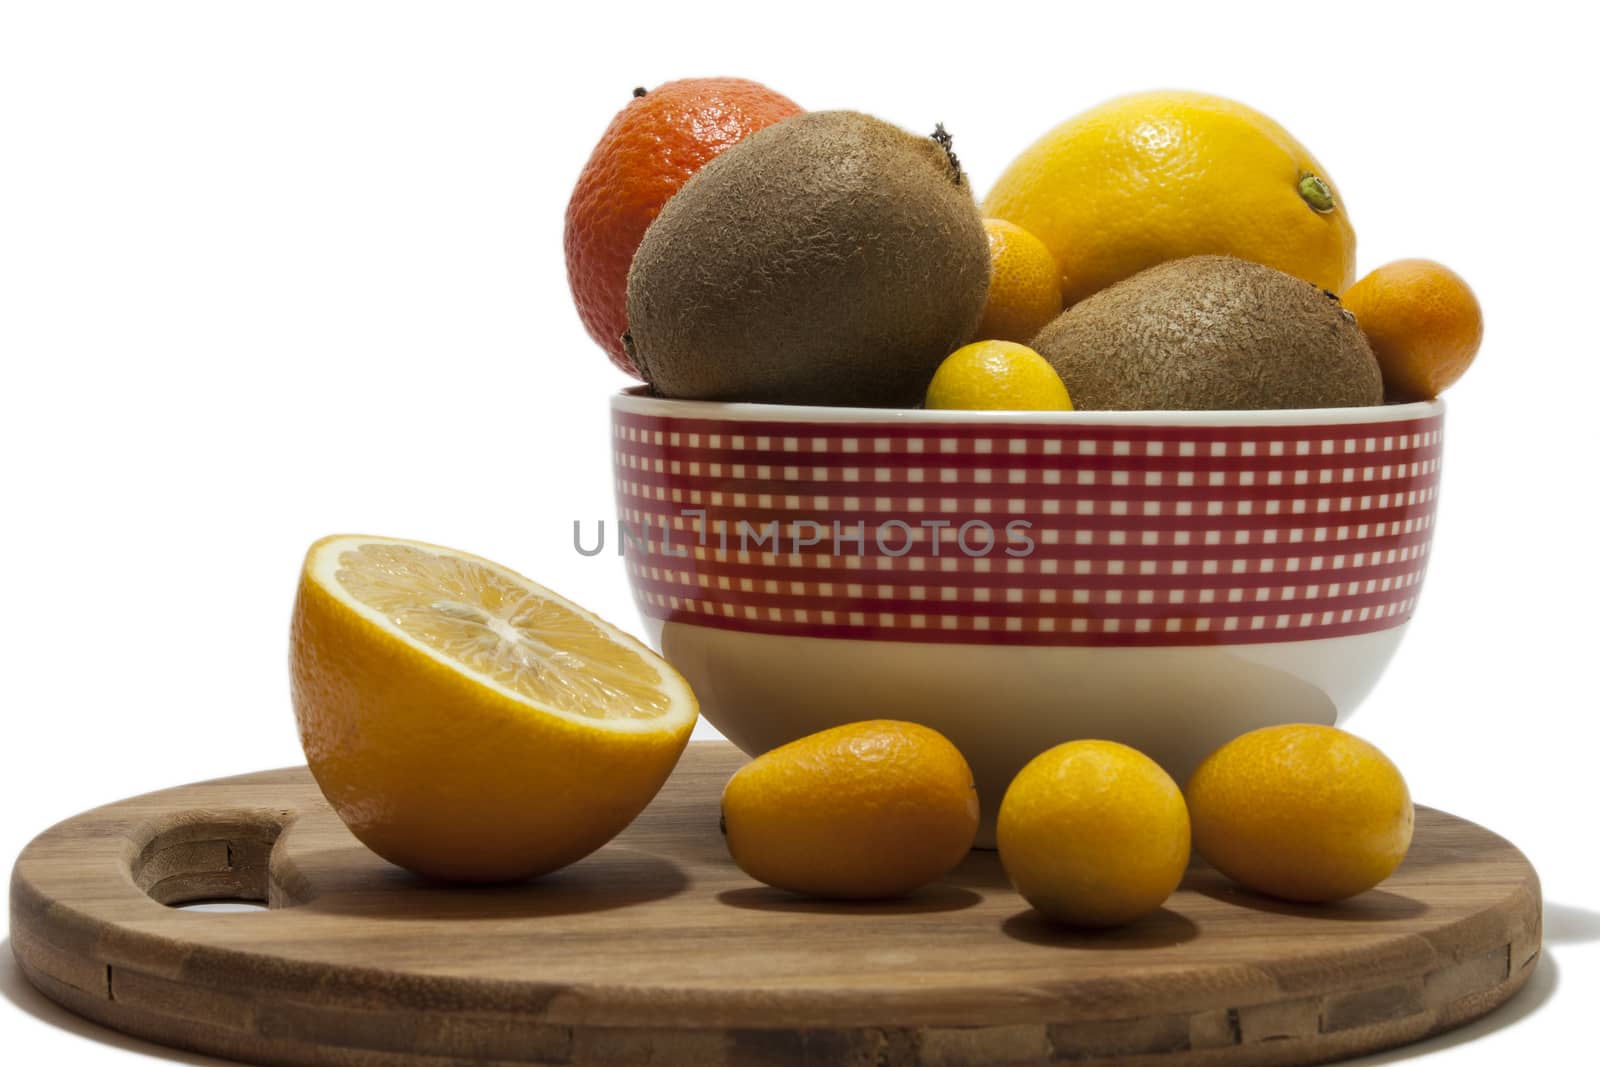 Fruit arrangement in the bowl and on the kitchen wooden board. Lemon, kumquat, kiwi and tangerine in the bowl and on the kitchen wooden board.